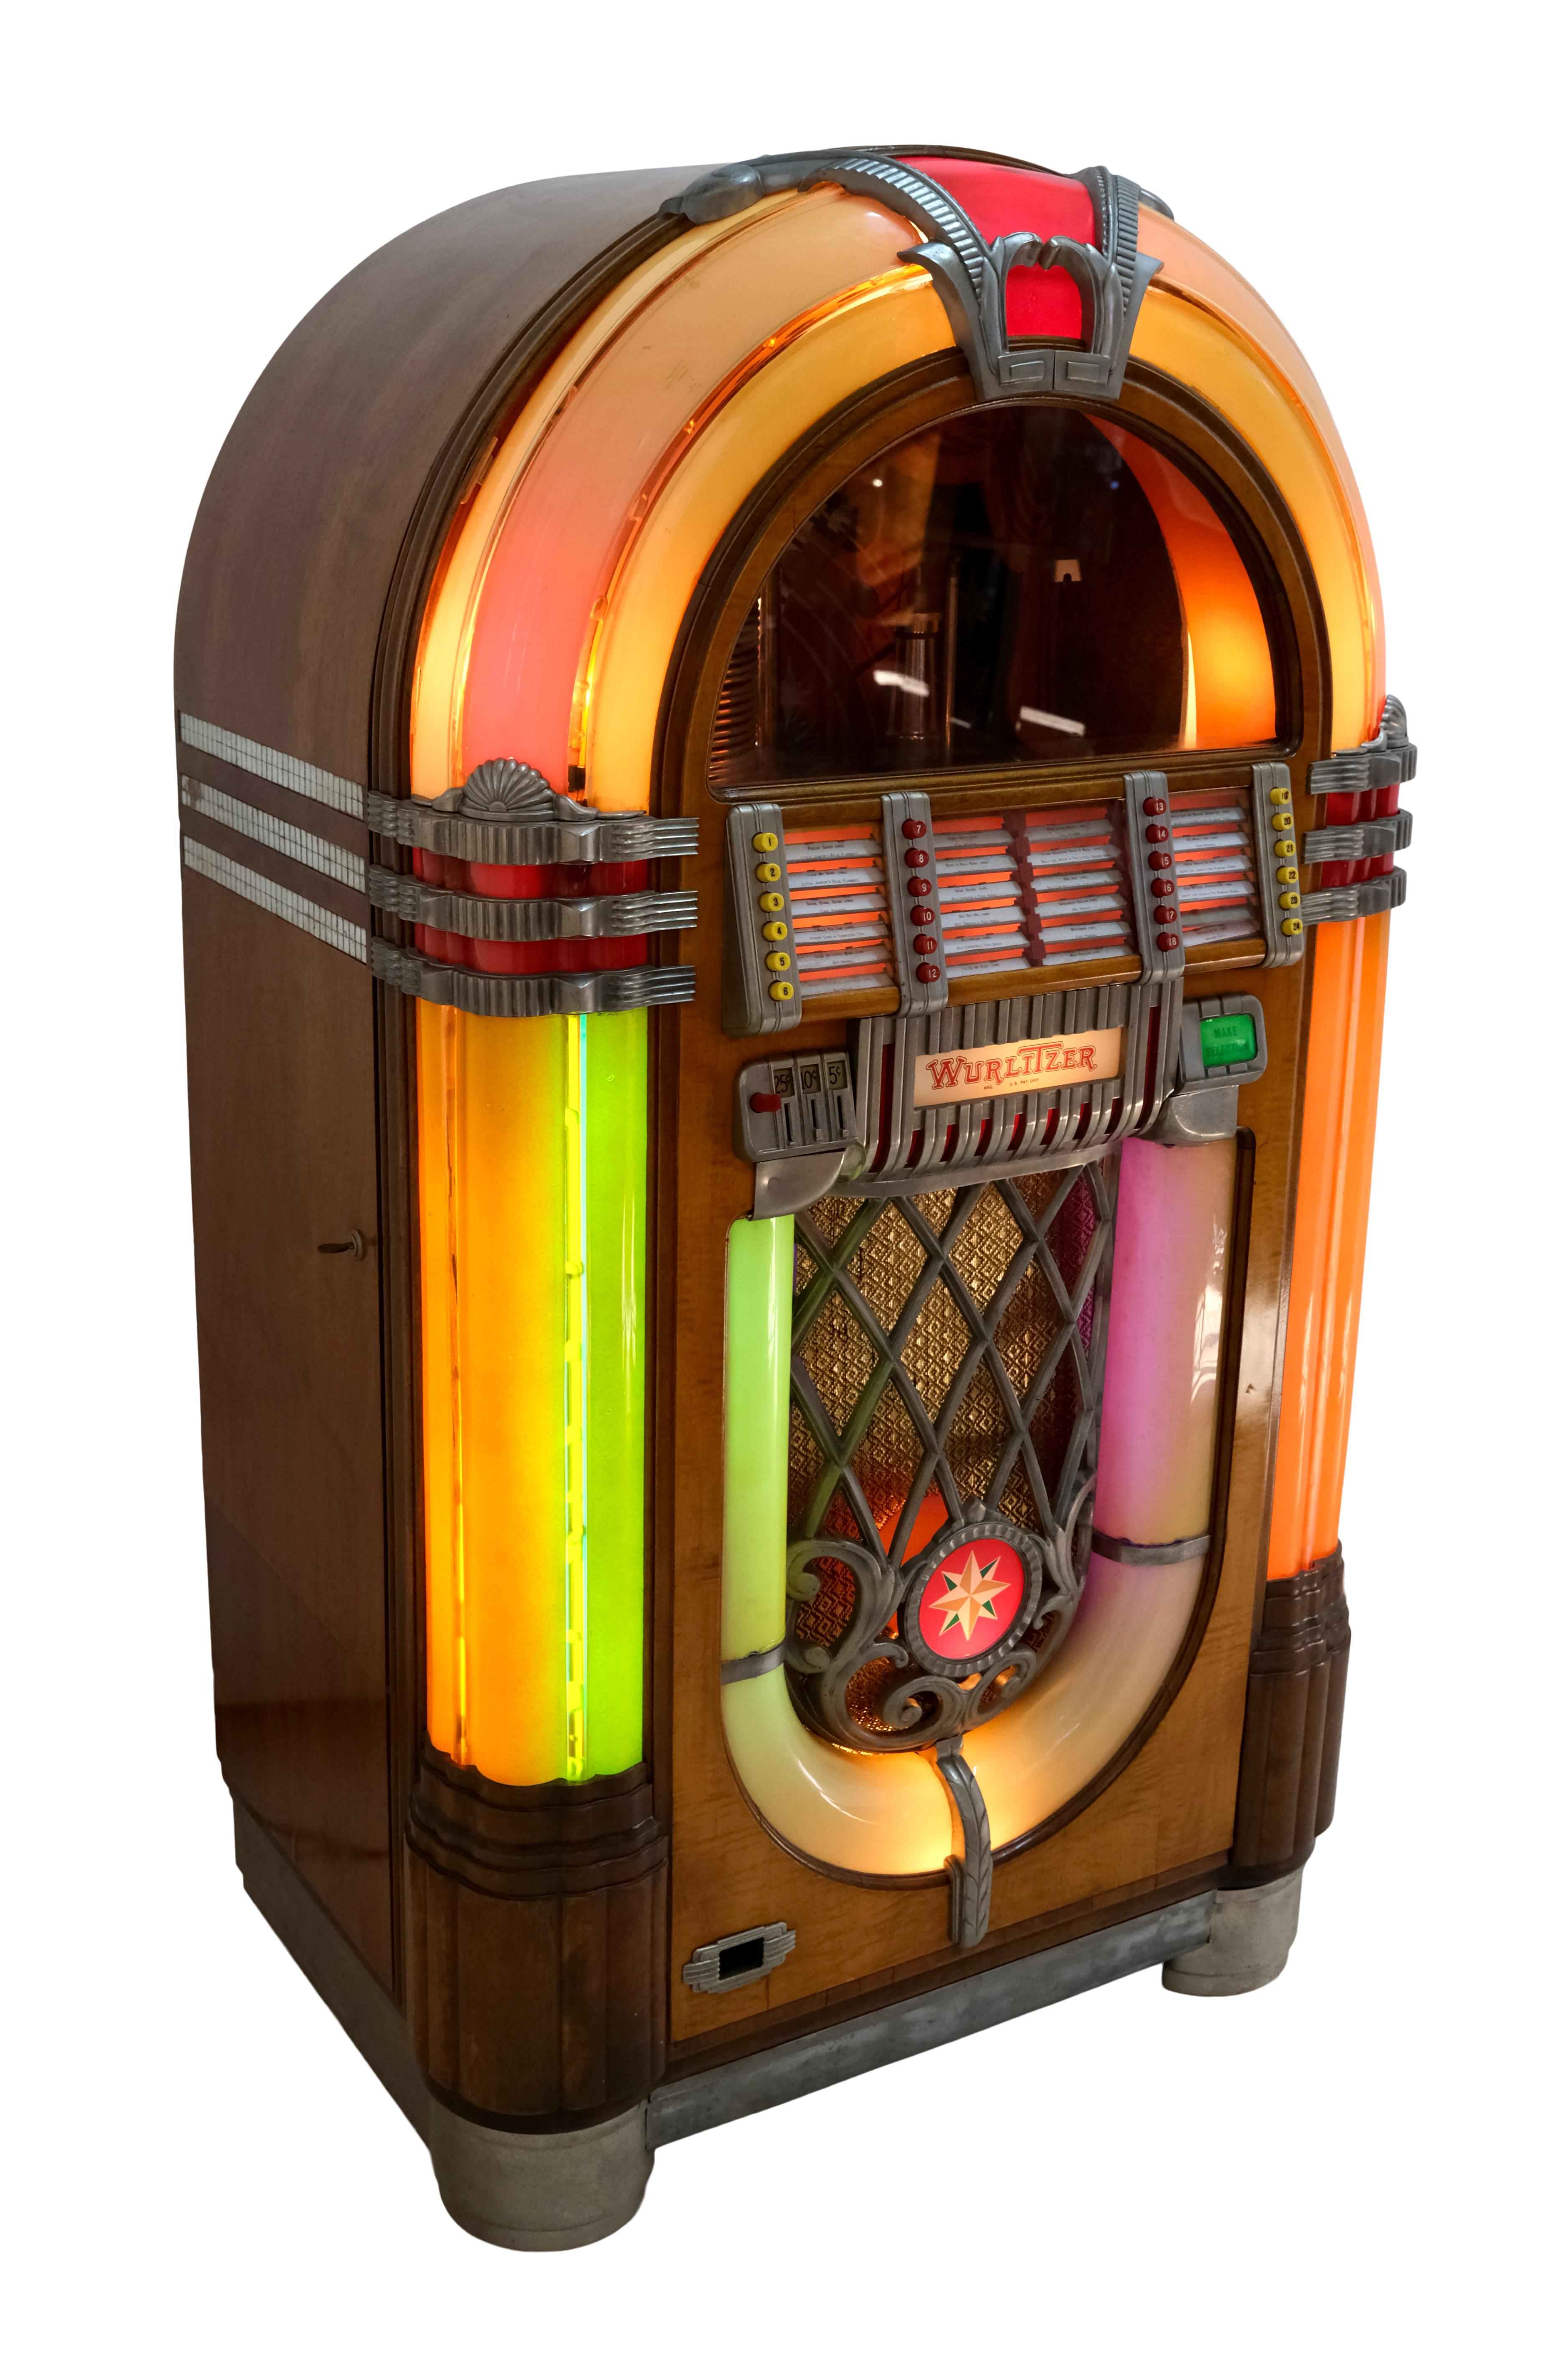 Wurlitzer Jukebox - For Sale on 1stDibs | wurlitzer jukebox for sale,  wurlitzer jukebox price, how much is a wurlitzer jukebox worth